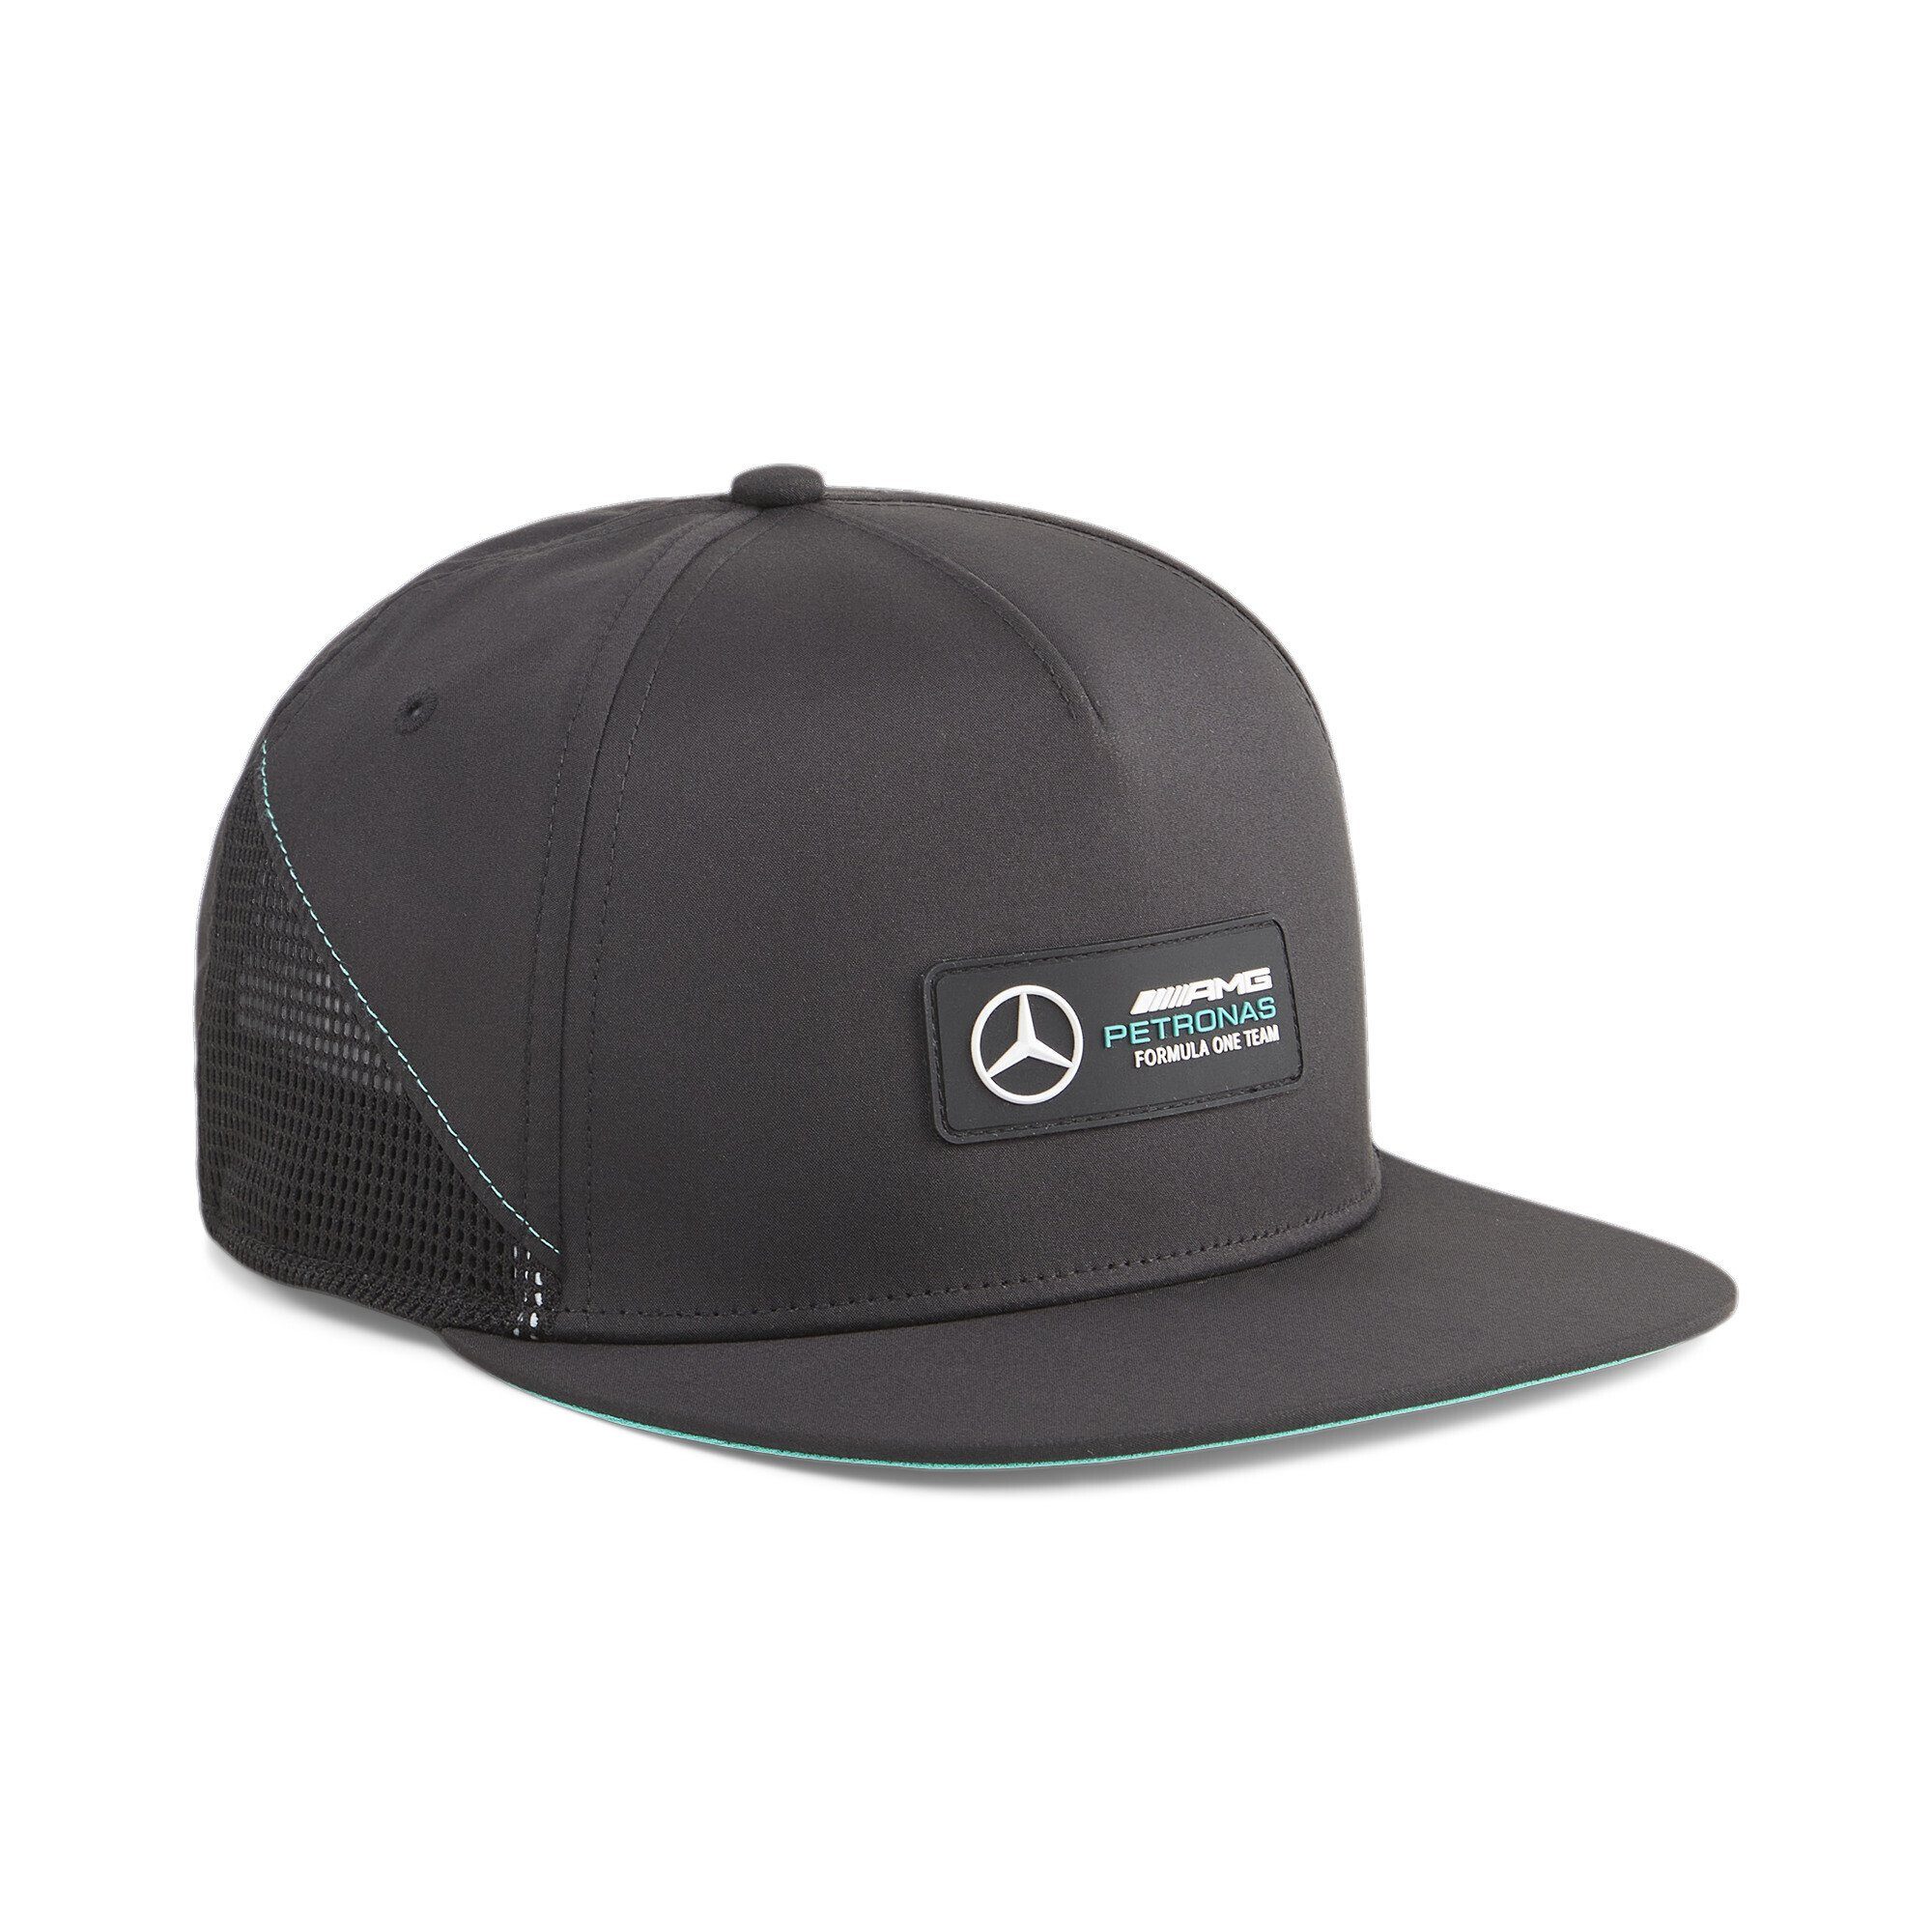 flachem Erwachsene Flex Mercedes-AMG Schirm PETRONAS Cap PUMA Cap mit